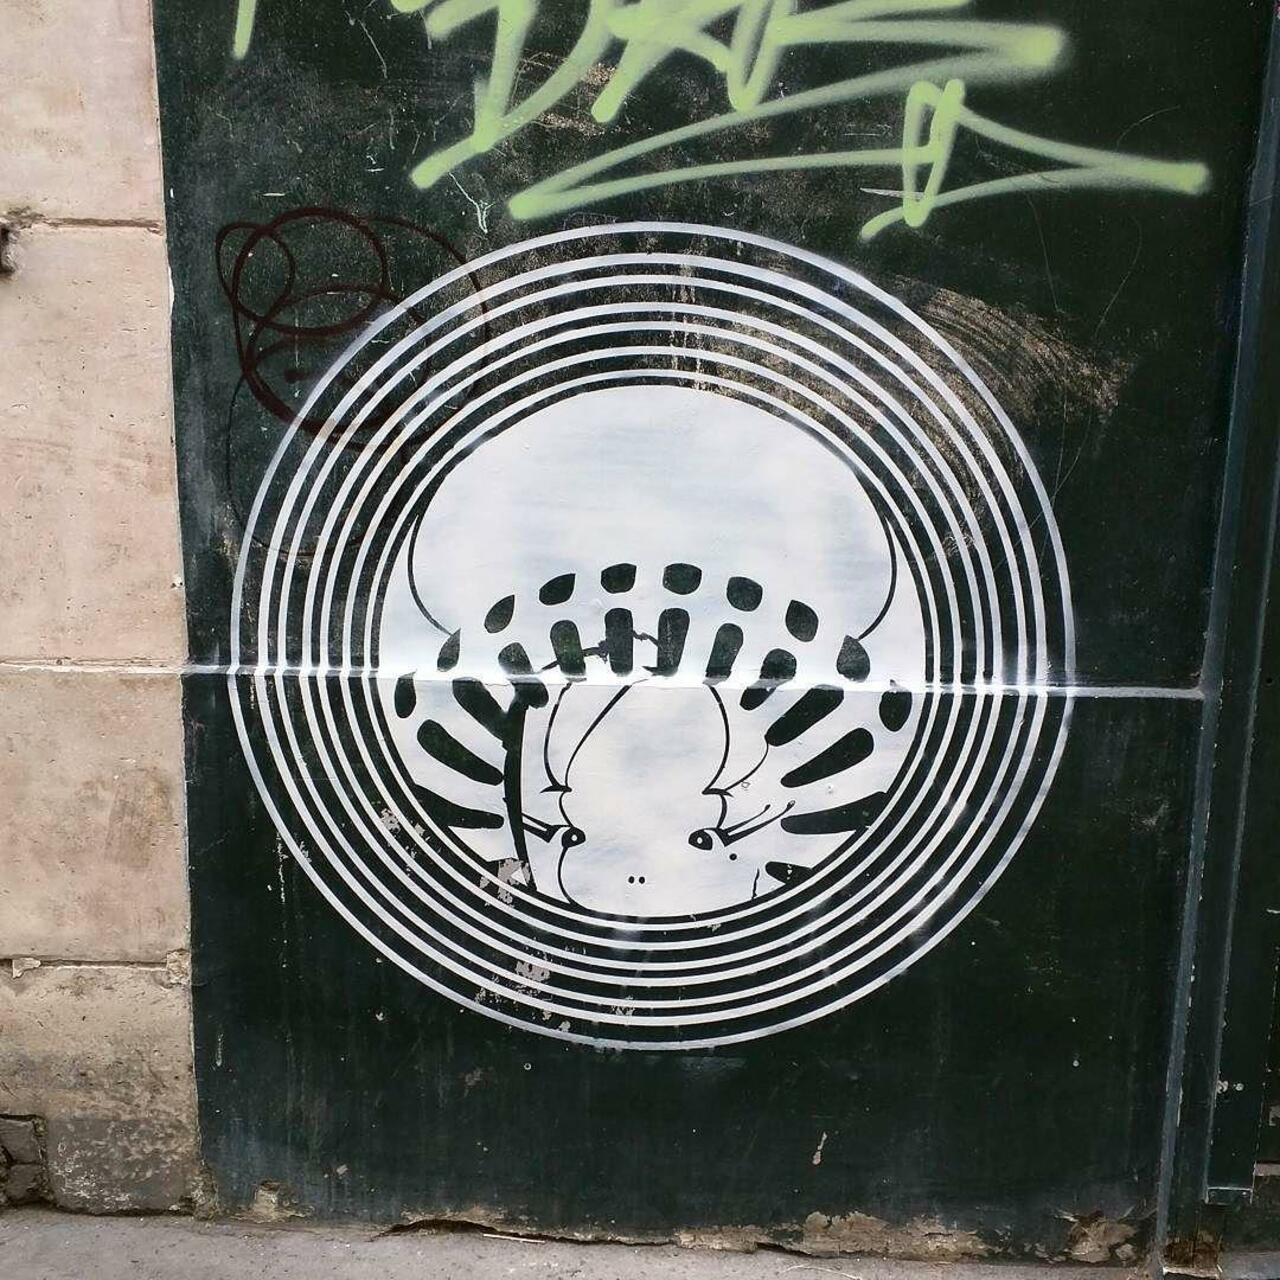 #Paris #graffiti photo by @alphaquadra http://ift.tt/1GFdX9P #StreetArt http://t.co/fkMmE3Ujj6